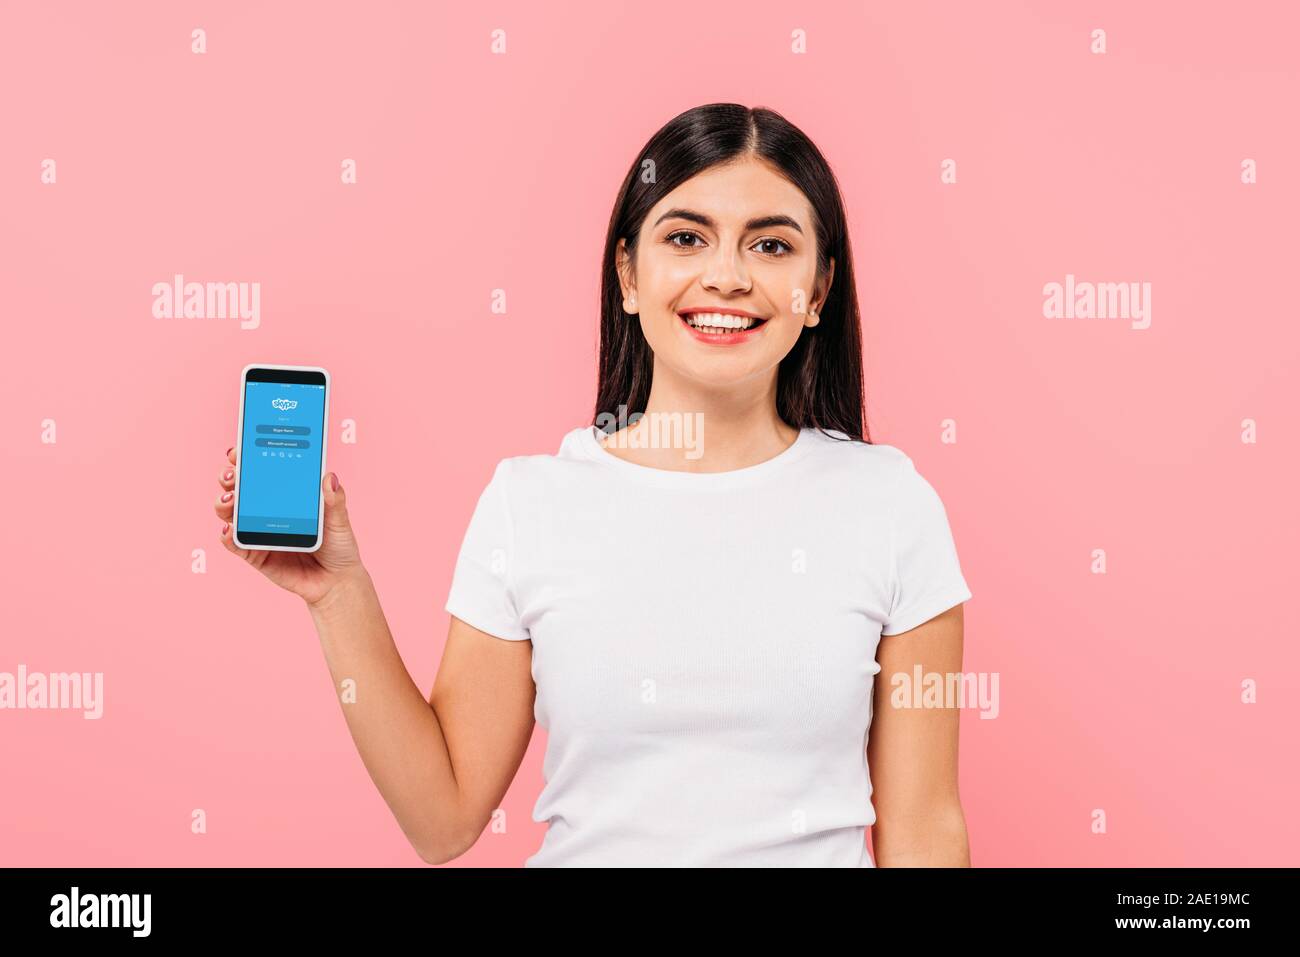 Kiev, UKRAINE - 20 septembre 2019 : jolie brunette smiling girl holding smartphone avec l'application Skype sur rose isolé Banque D'Images